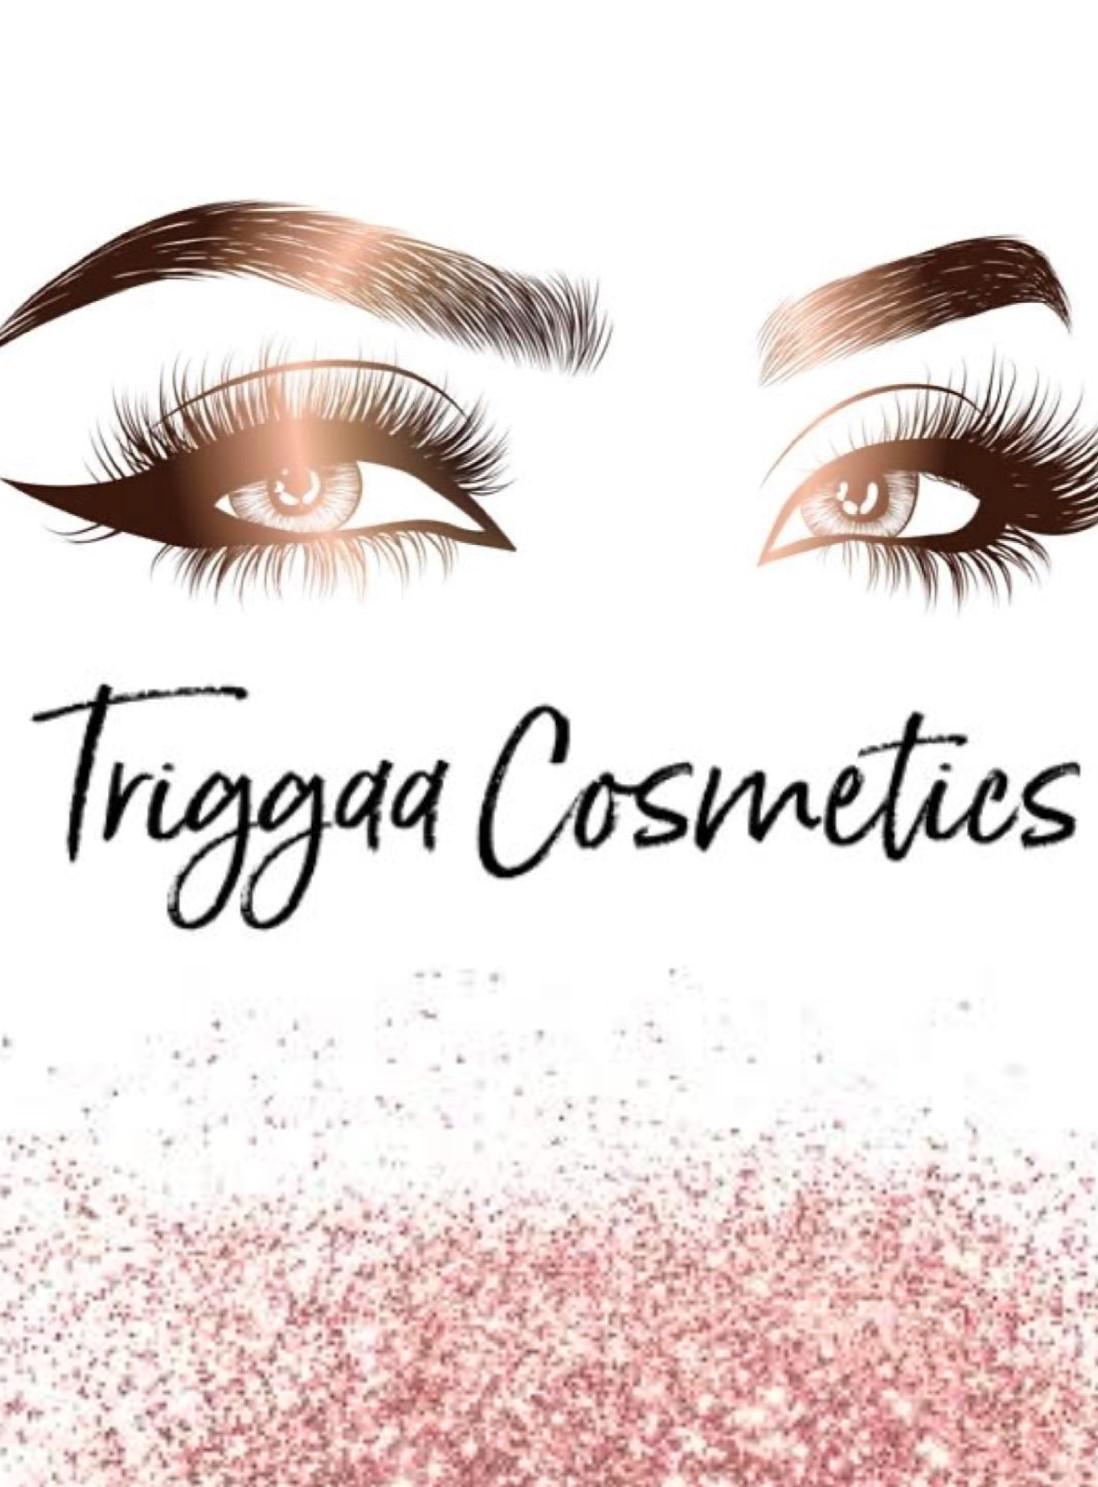 Triggaa Cosmetics Logo